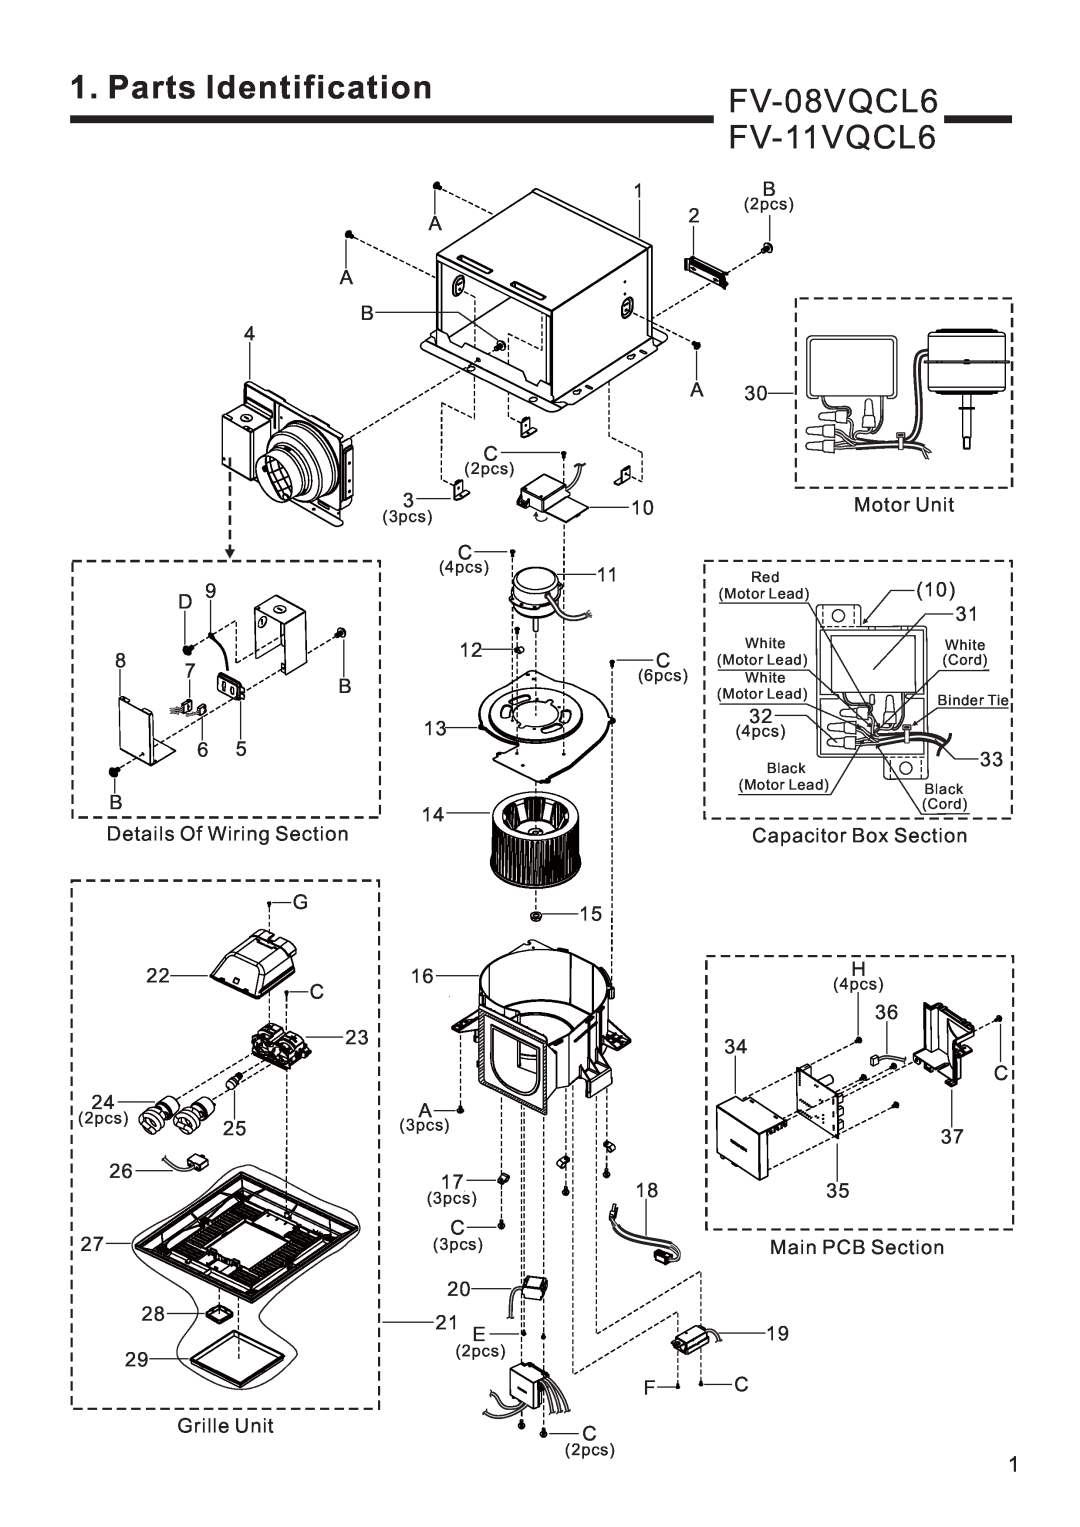 Panasonic FV-11VQCL6 service manual Parts Identification, FV-08VQCL6 